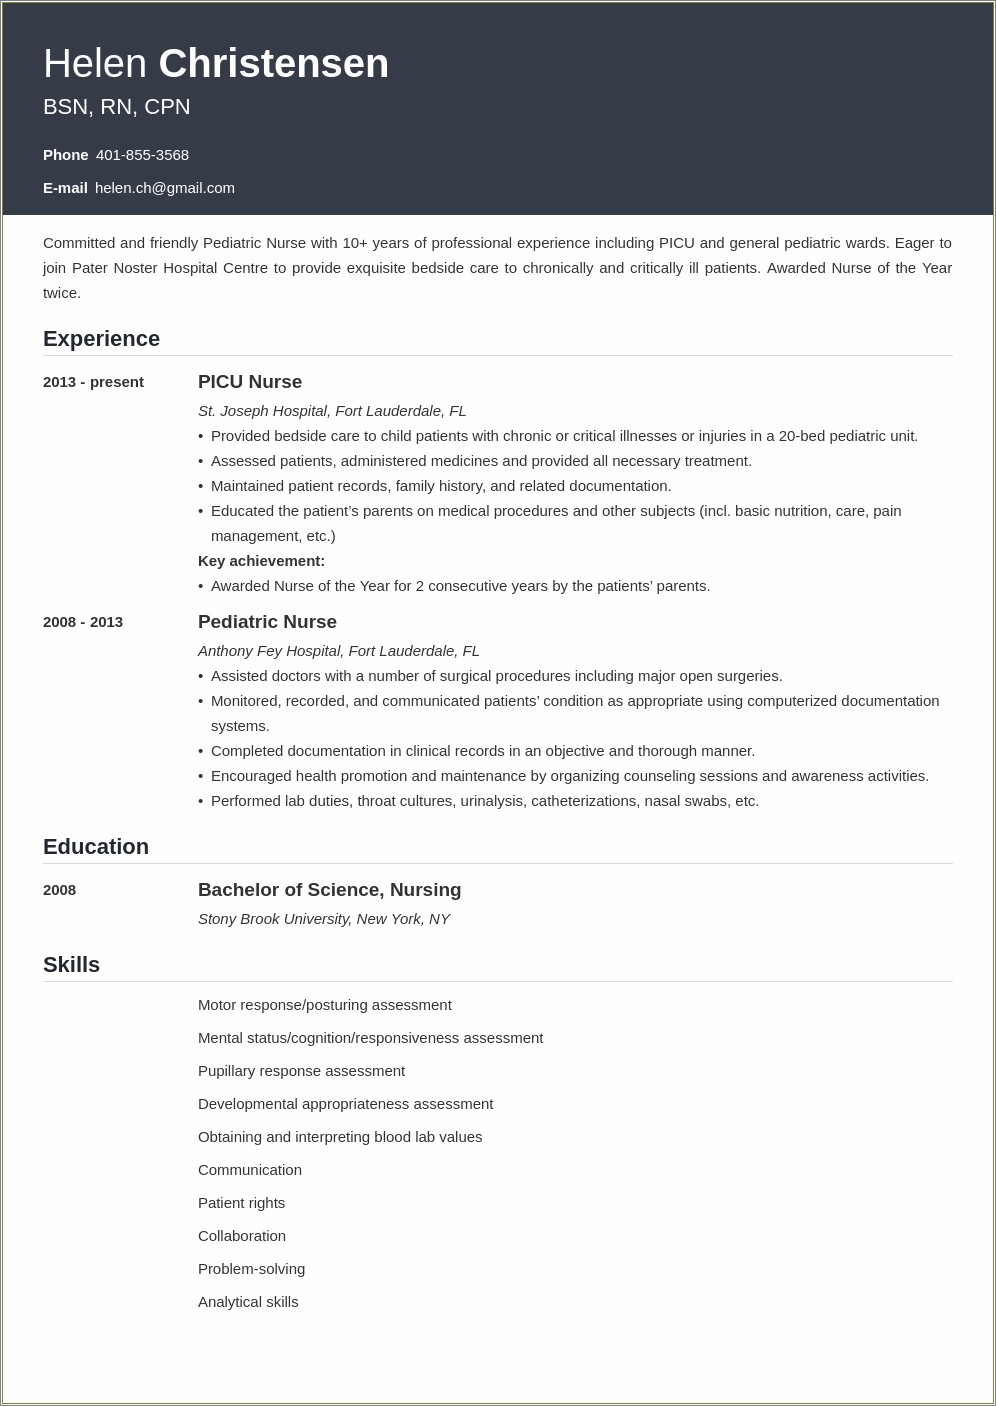 Resume Format For Nursing Job In India